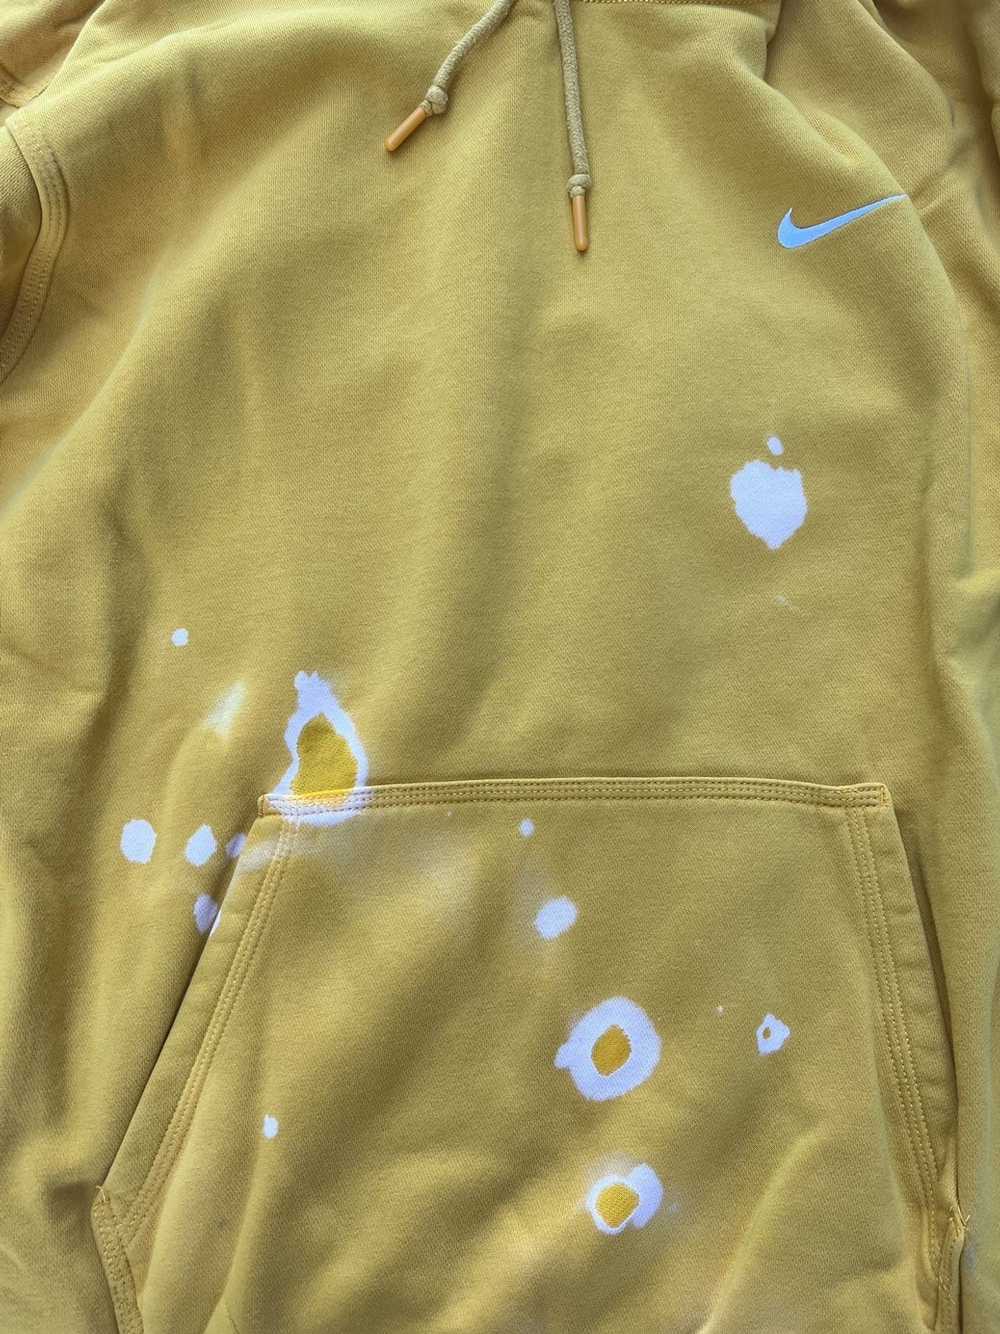 Nike Nike Acid Stained Yellow Hoodie - image 2